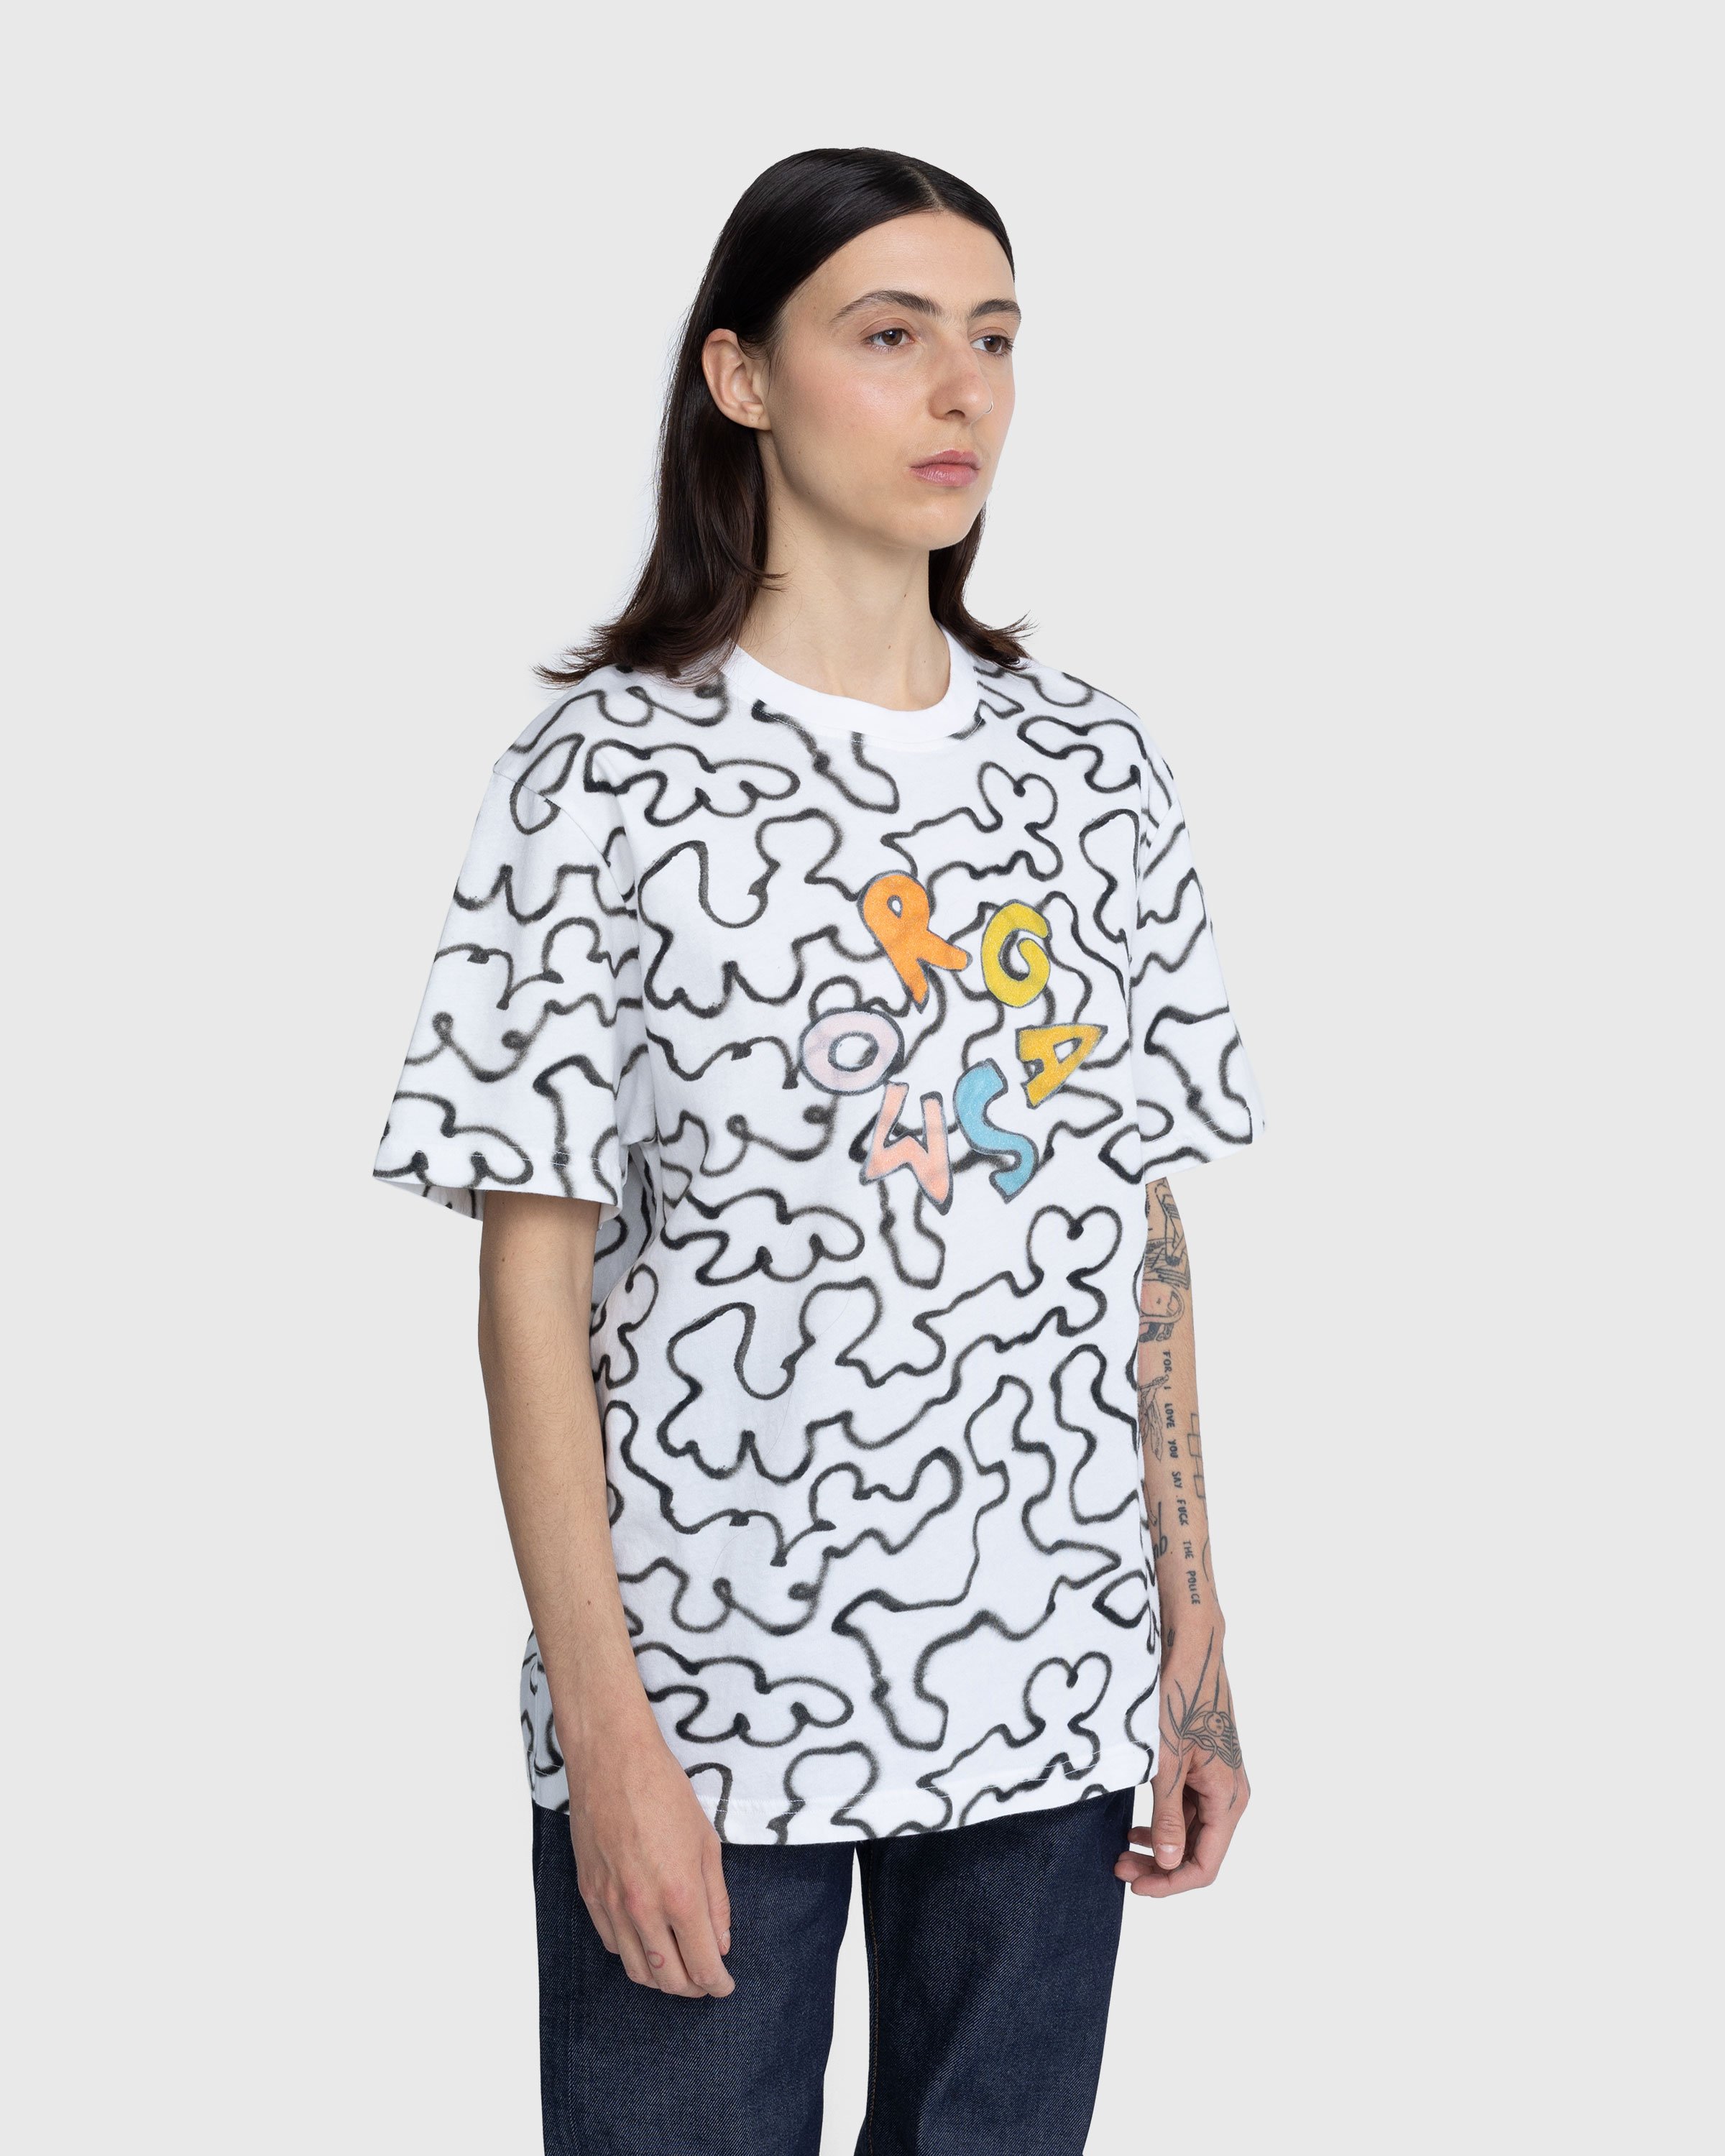 Carne Bollente x Frizbee Ceramics - Orgasm Twister T-Shirt White - Clothing - Multi - Image 4